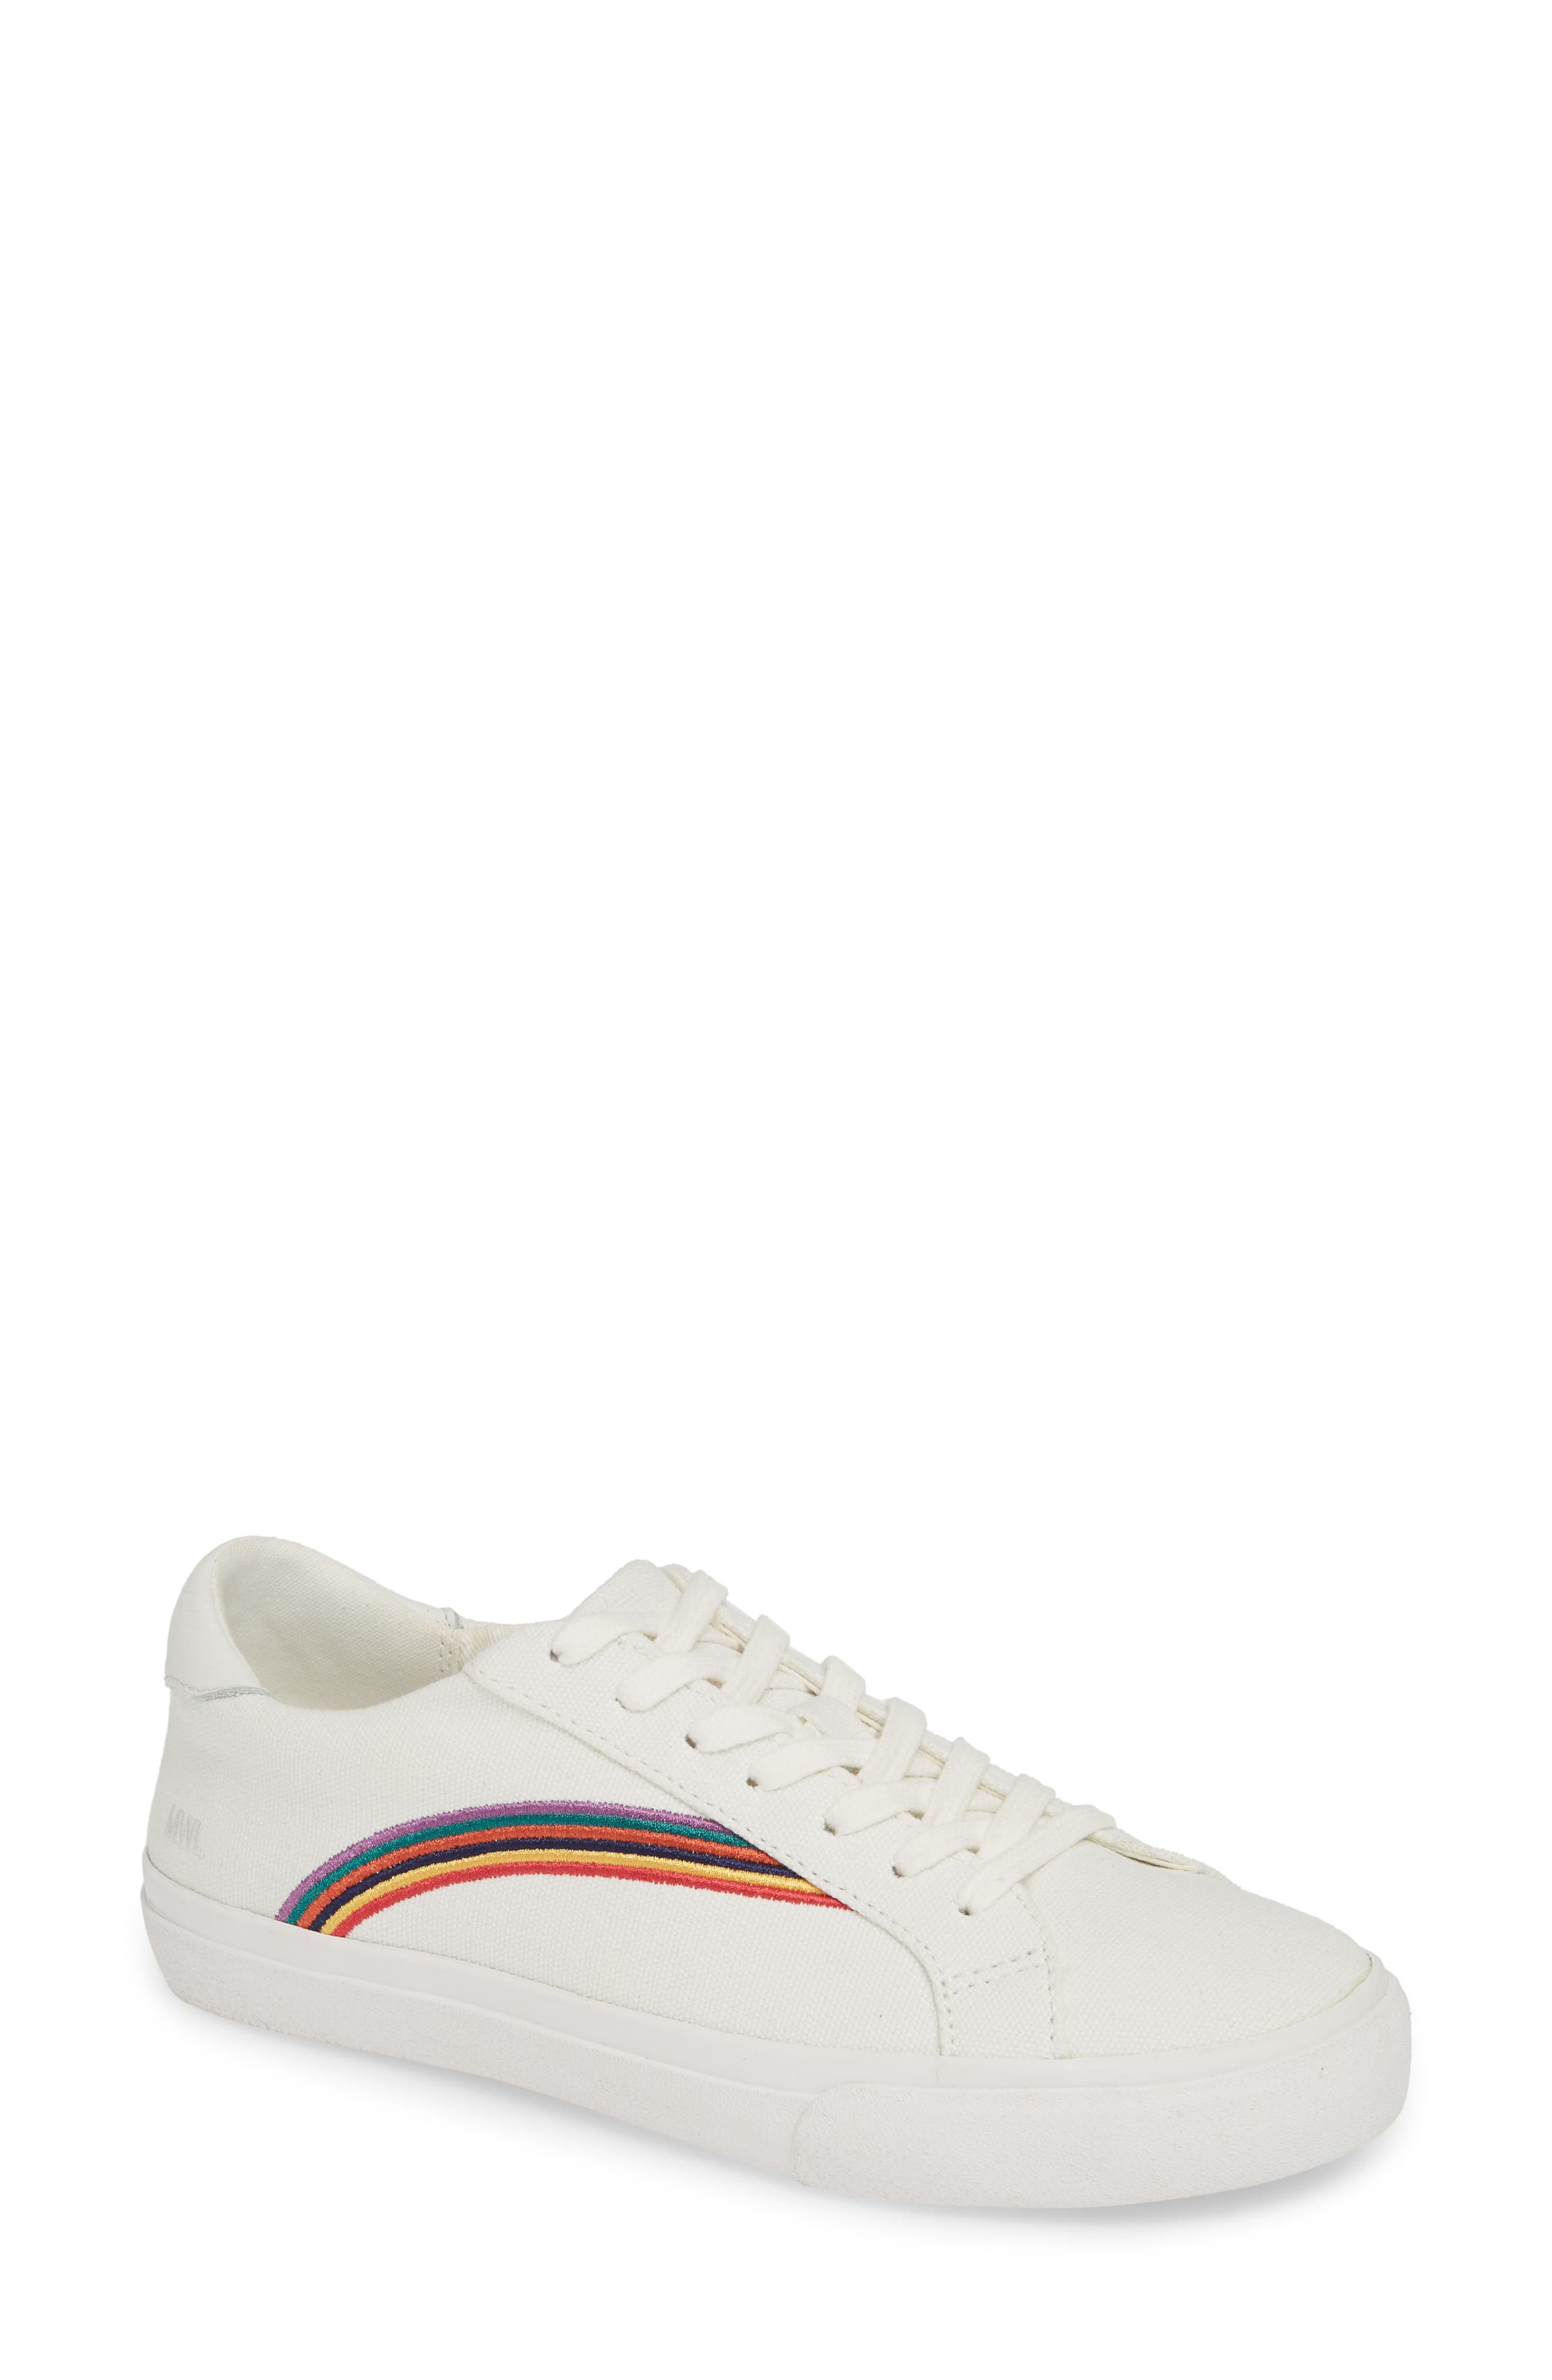 Madewell | Delia Rainbow Sneaker 